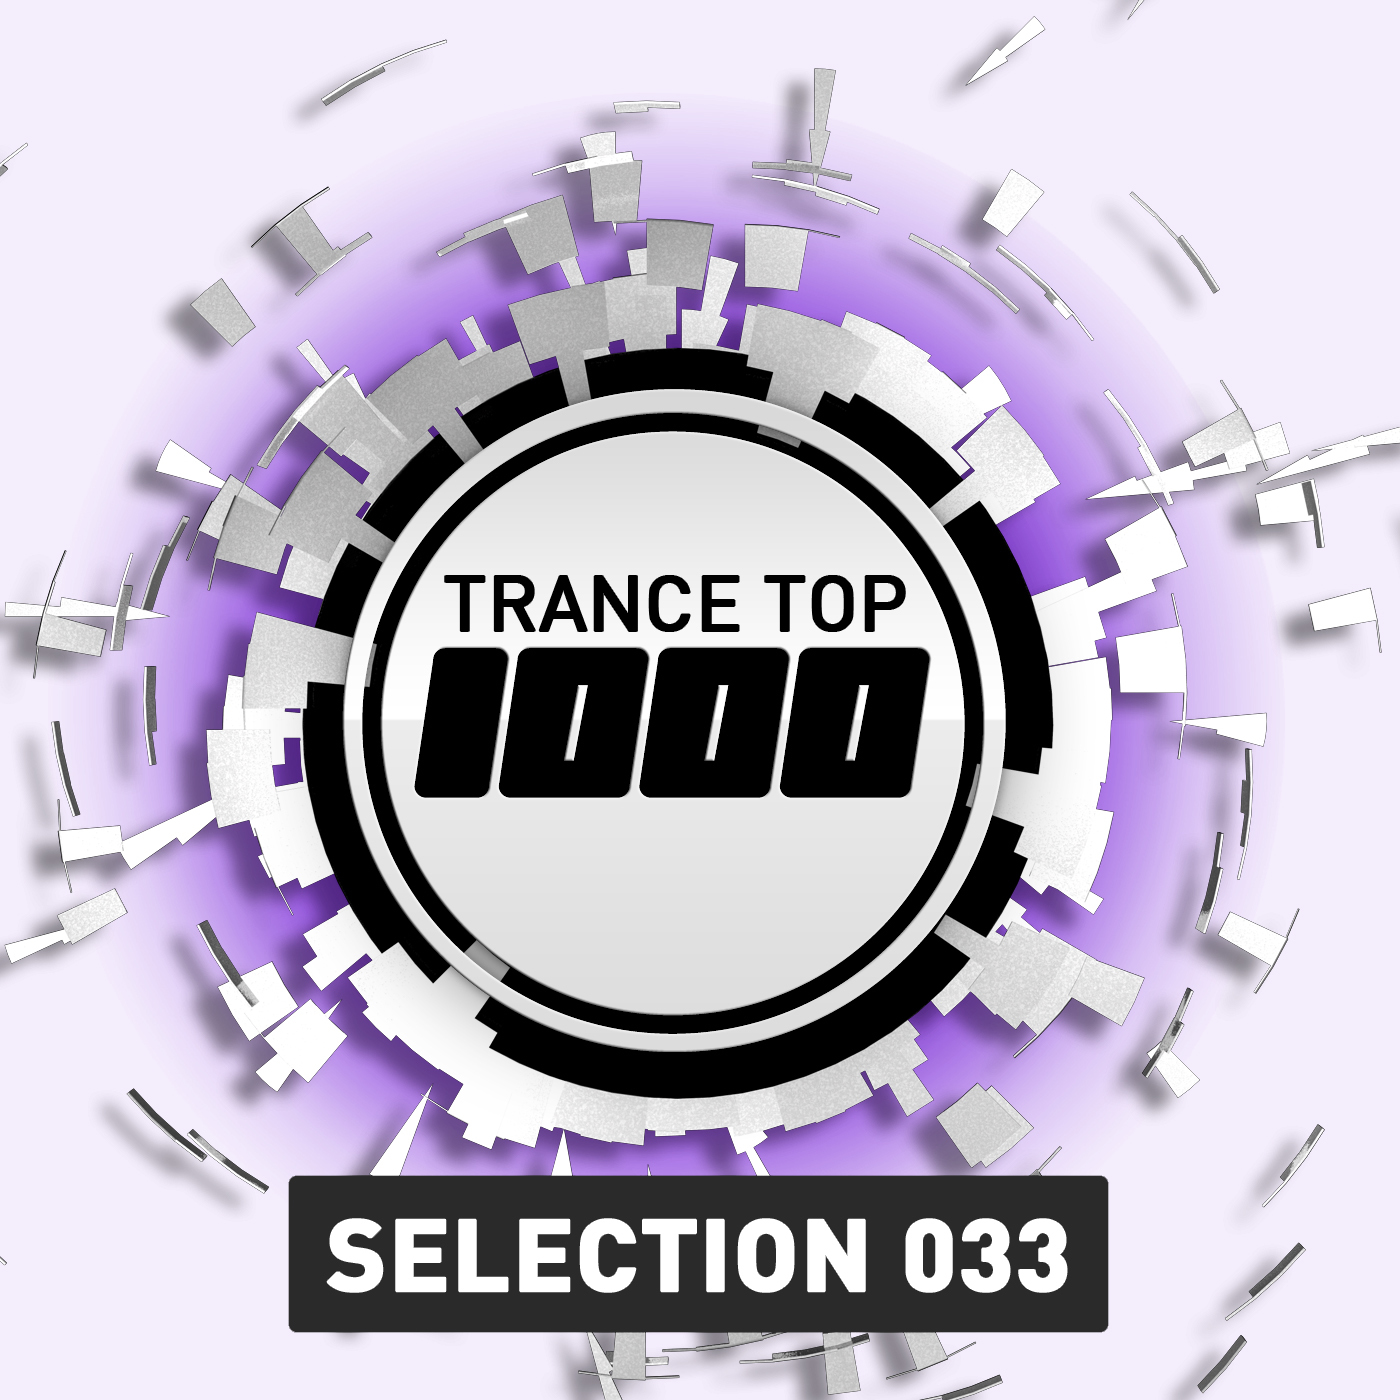 Trance Top 1000 Selection, Vol. 33